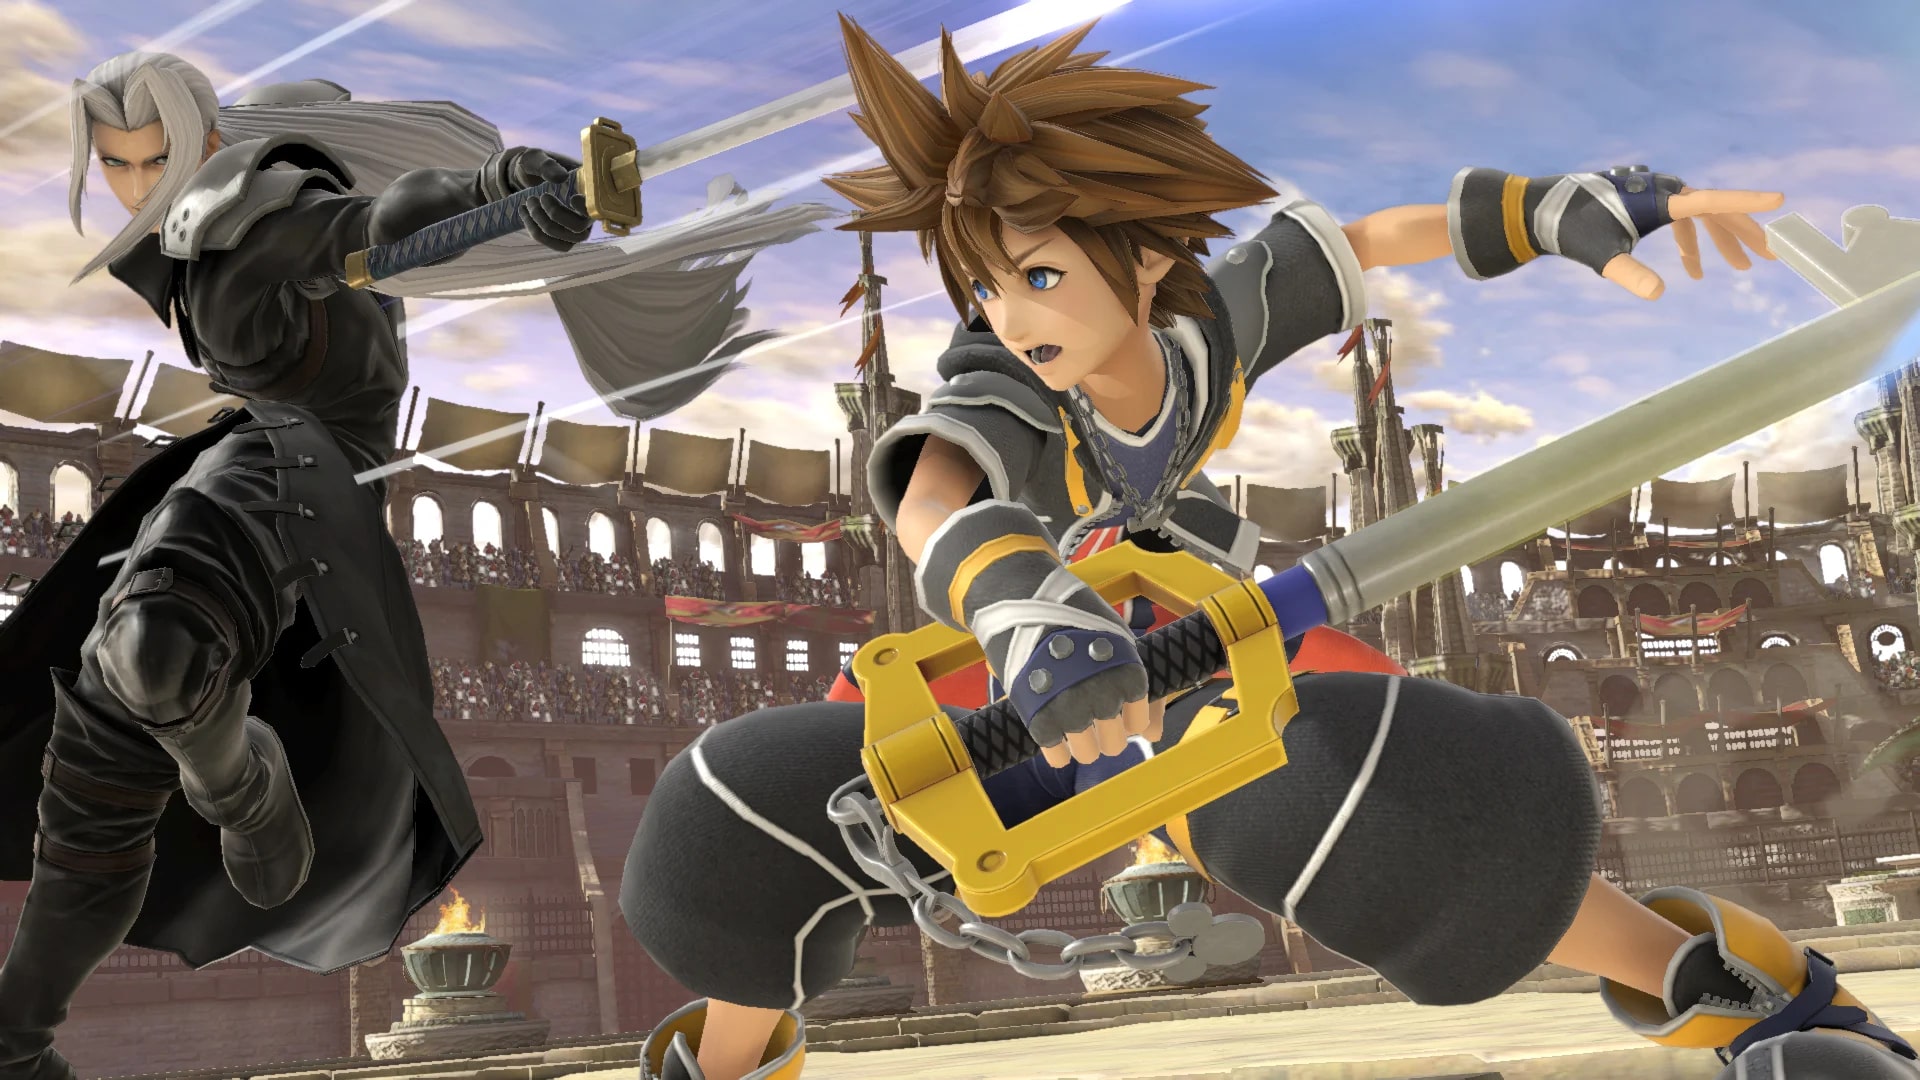 Nintendo reveals final fighter for Super Smash Bros. - Sora from Kingdom Hearts | SYFY WIRE